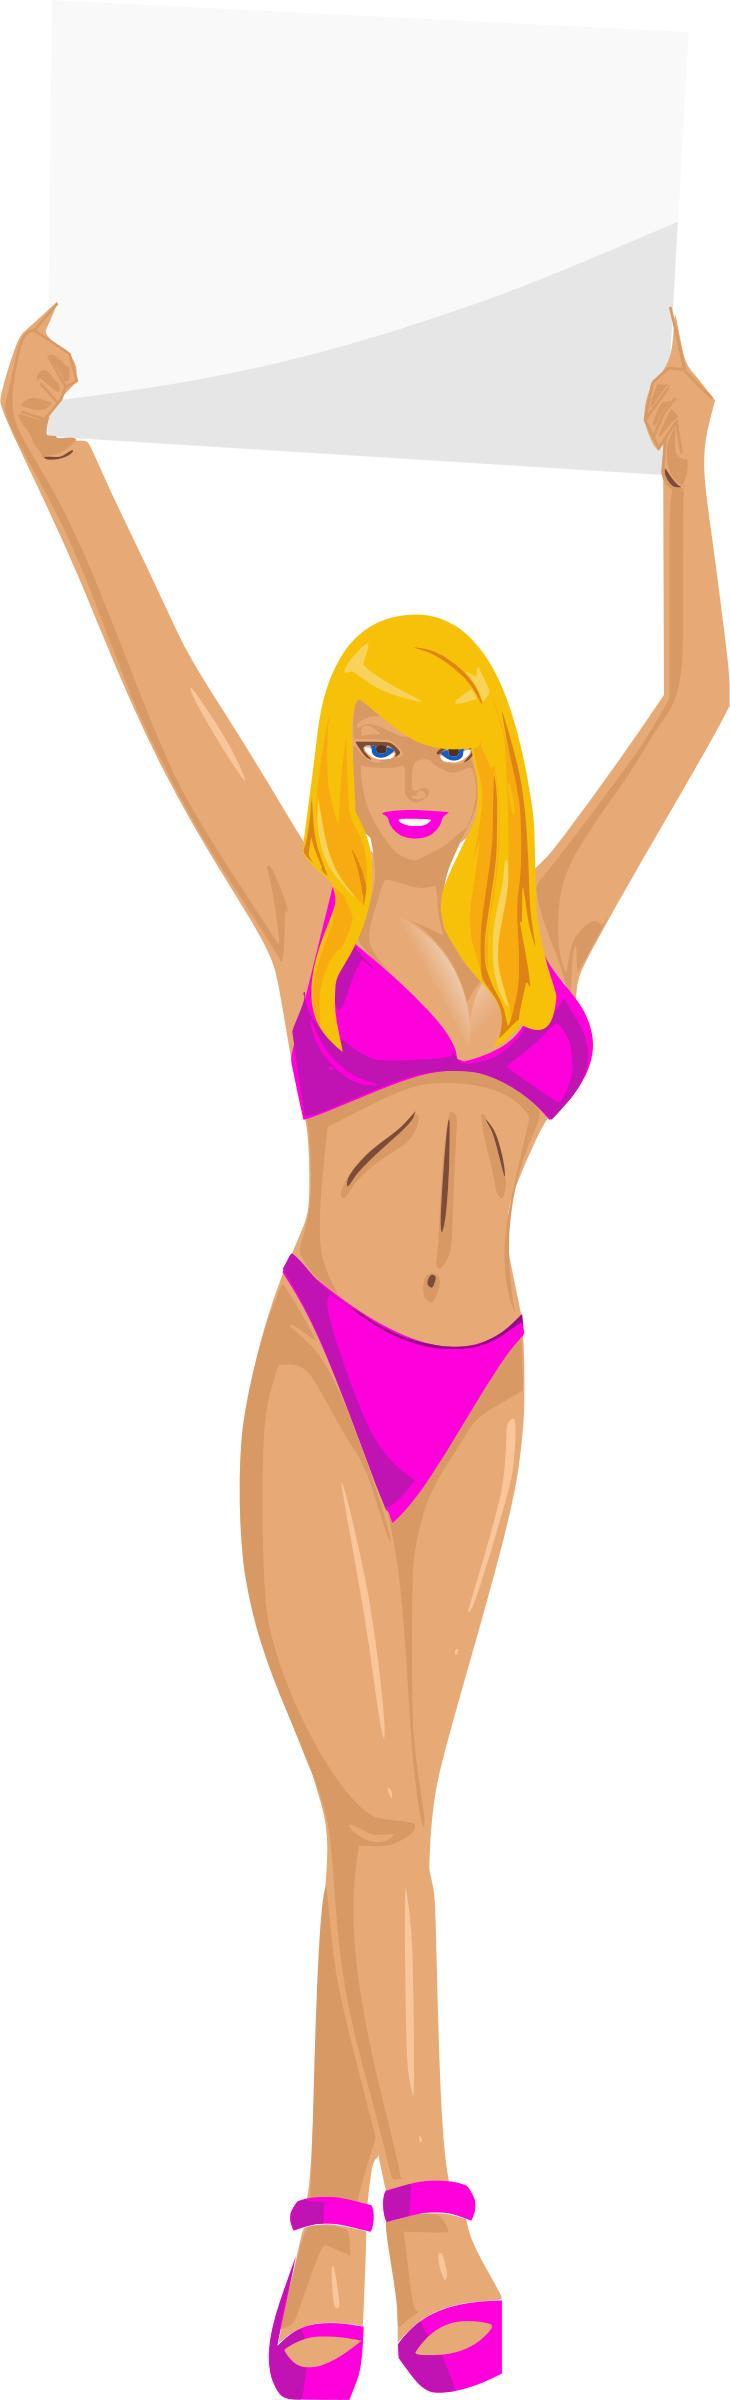 Girl with sign (pink bikini, blonde hair, light skin) png transparent